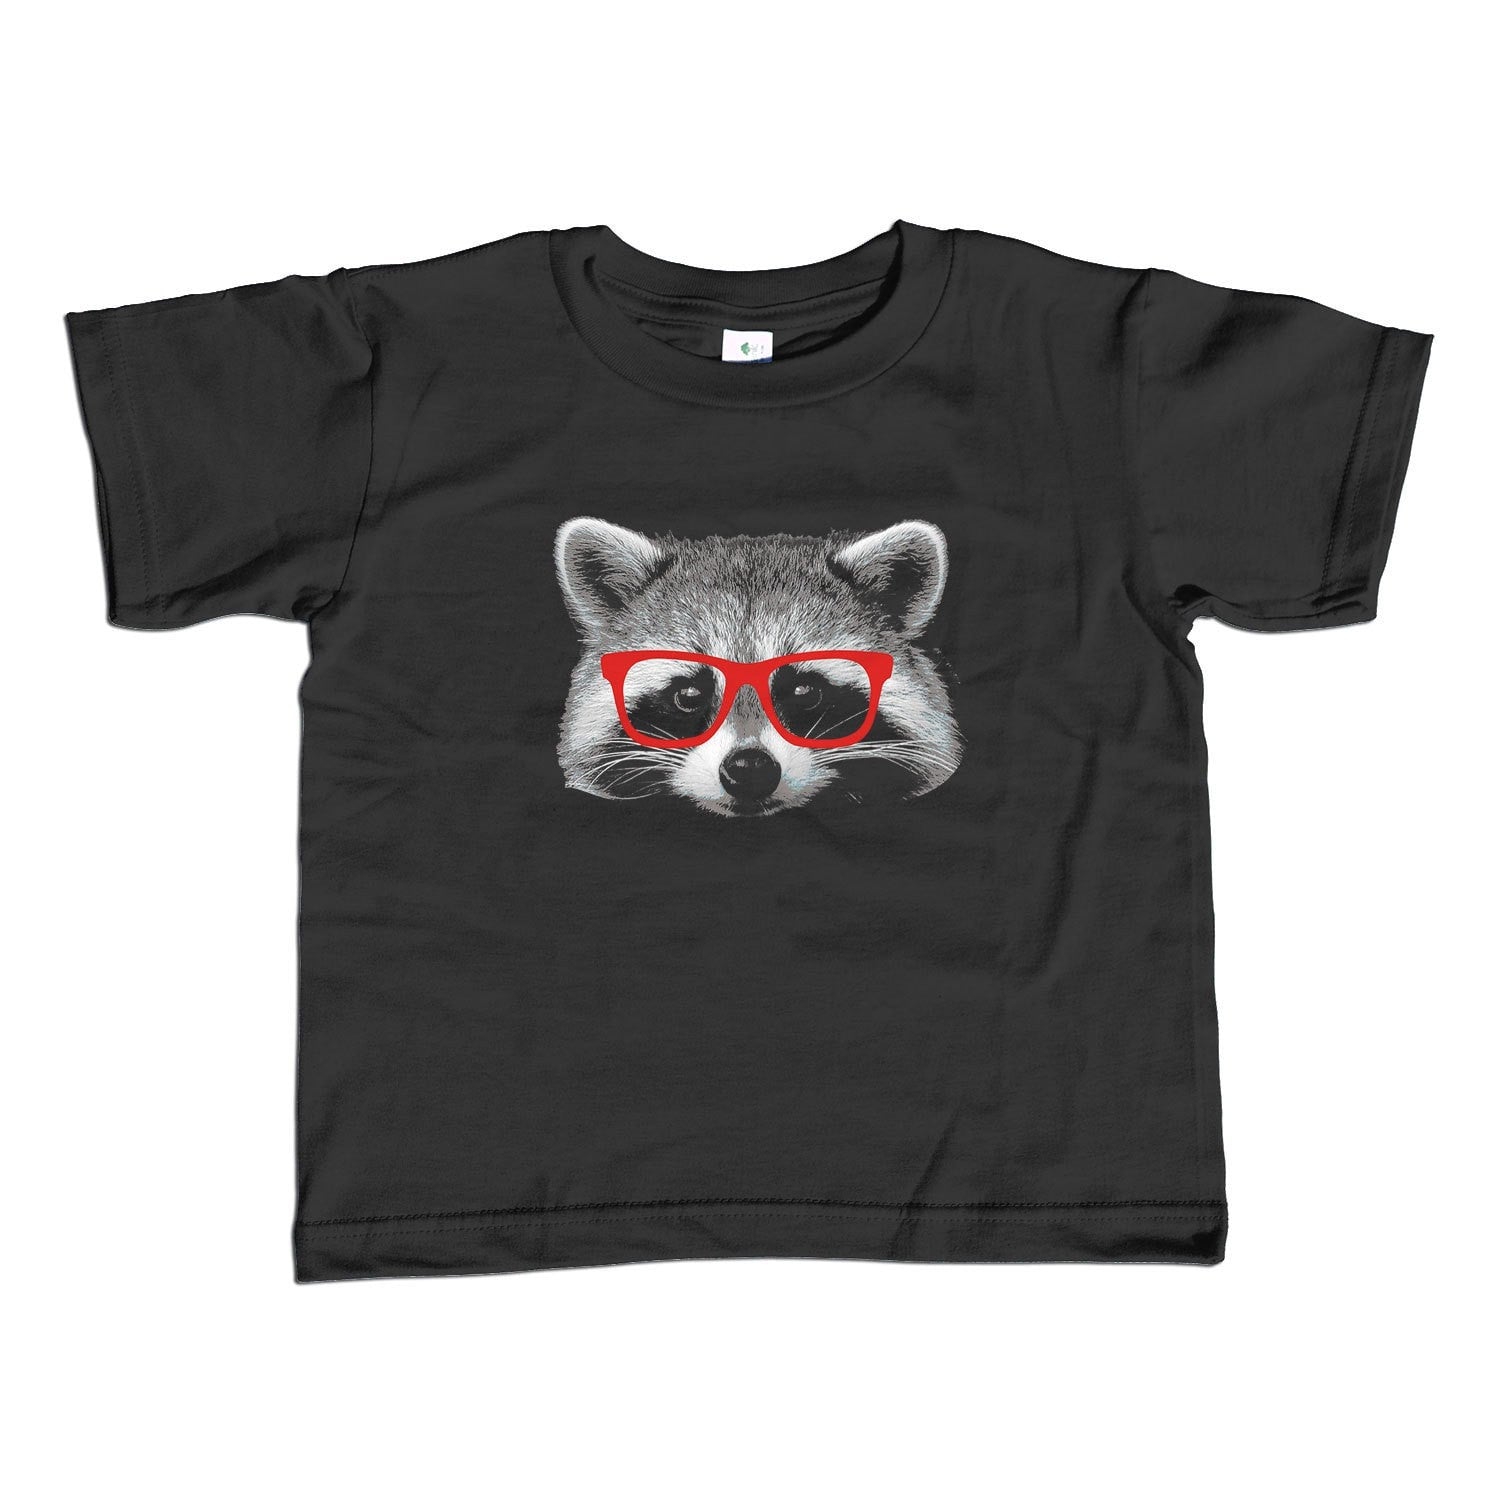 Boy's Glasses on a Raccoon T-Shirt Cute Funny Geeky